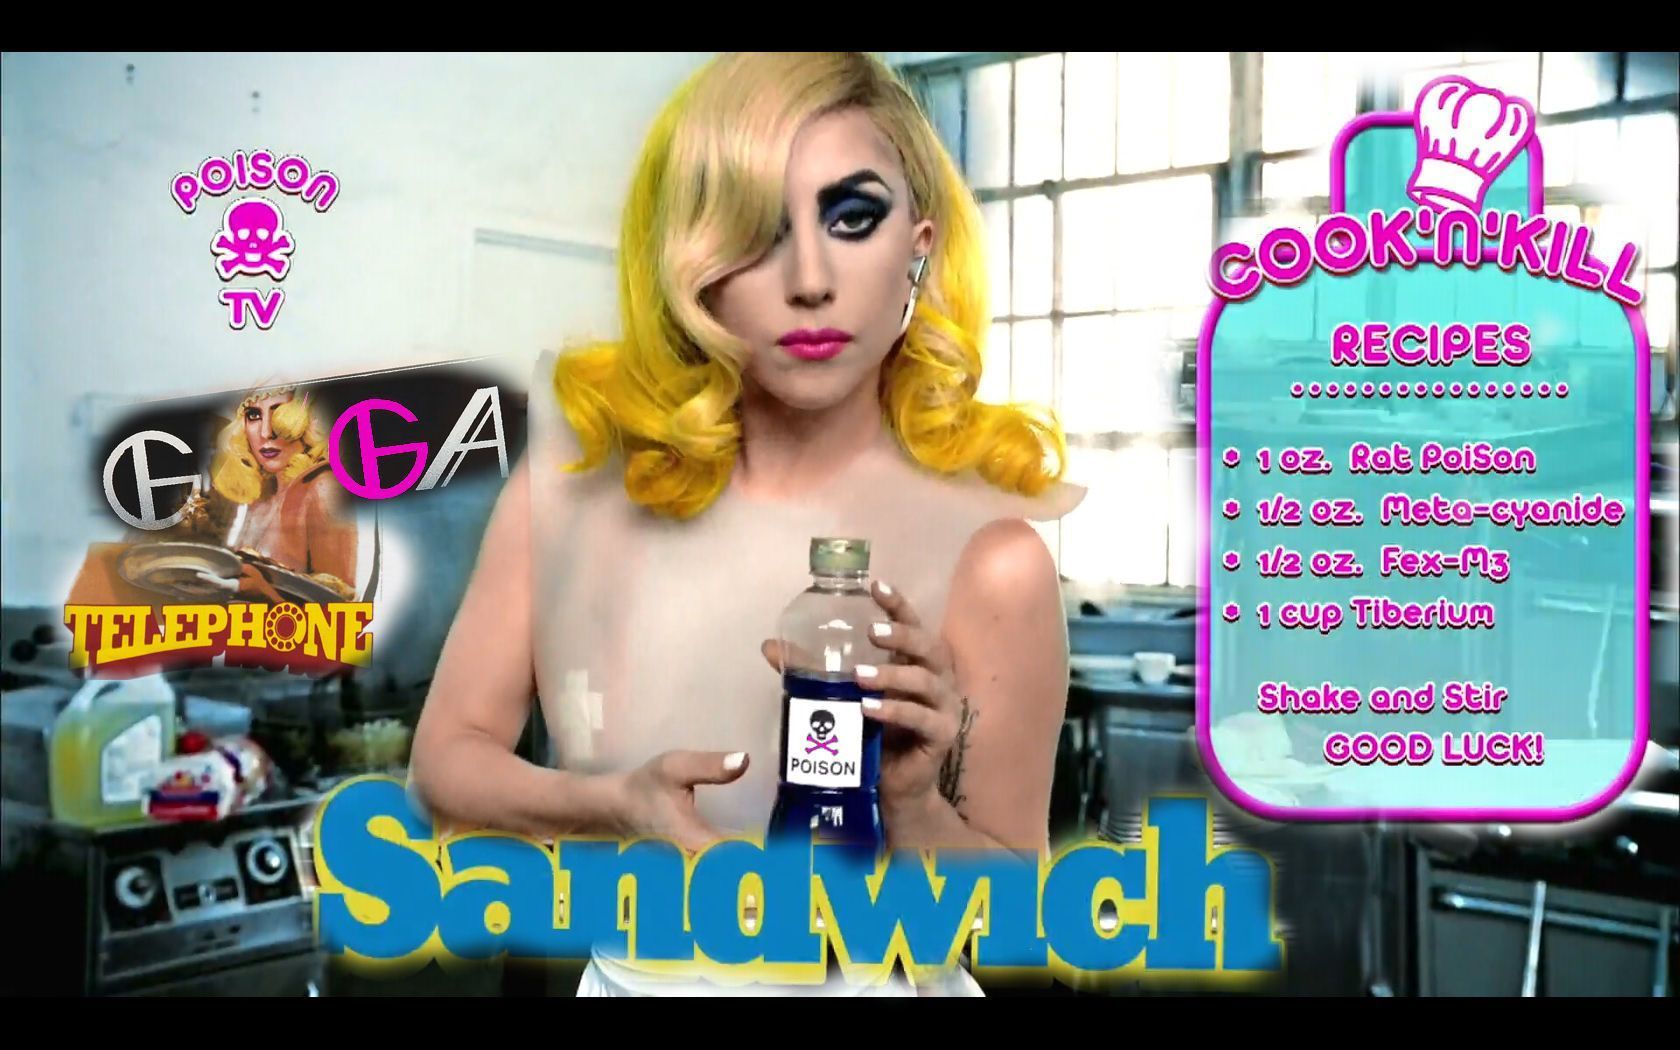 Lady GaGa Wallpapers - Lady Gaga Wallpaper (34677780) - Fanpop